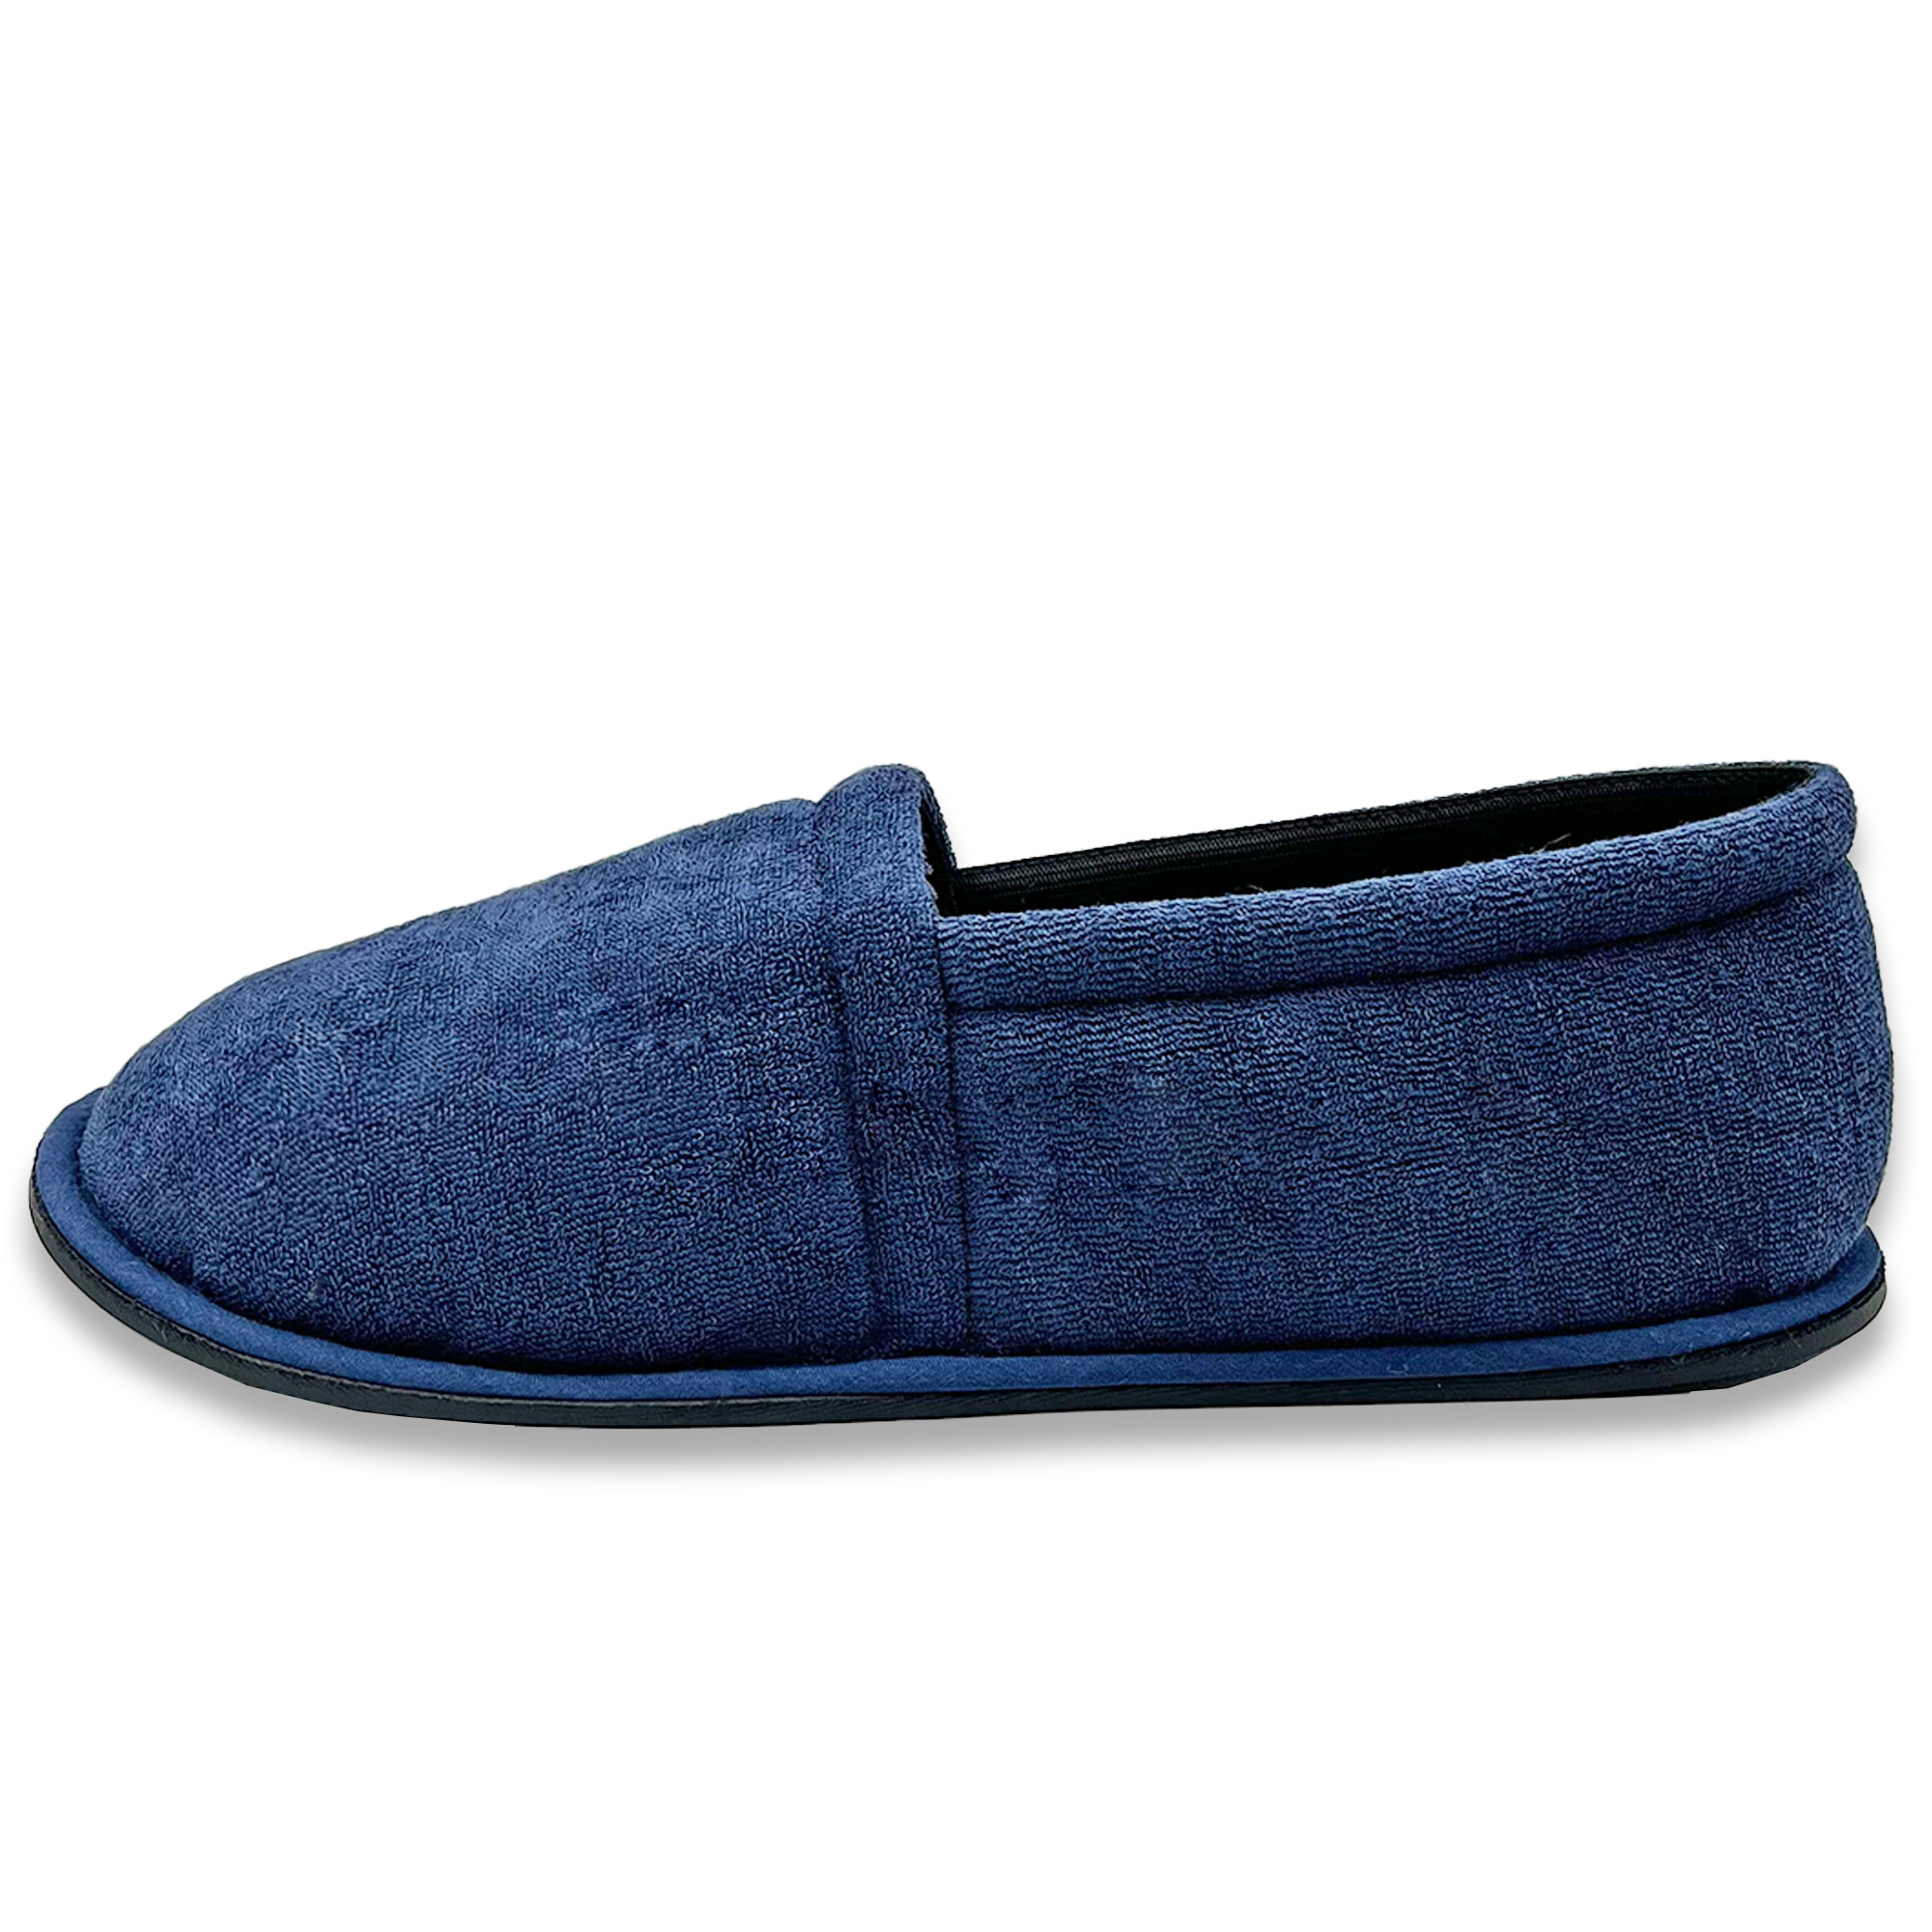 Men’s Cotten Terry Slipper Warm House Shoes Comfy Slip On | eBay